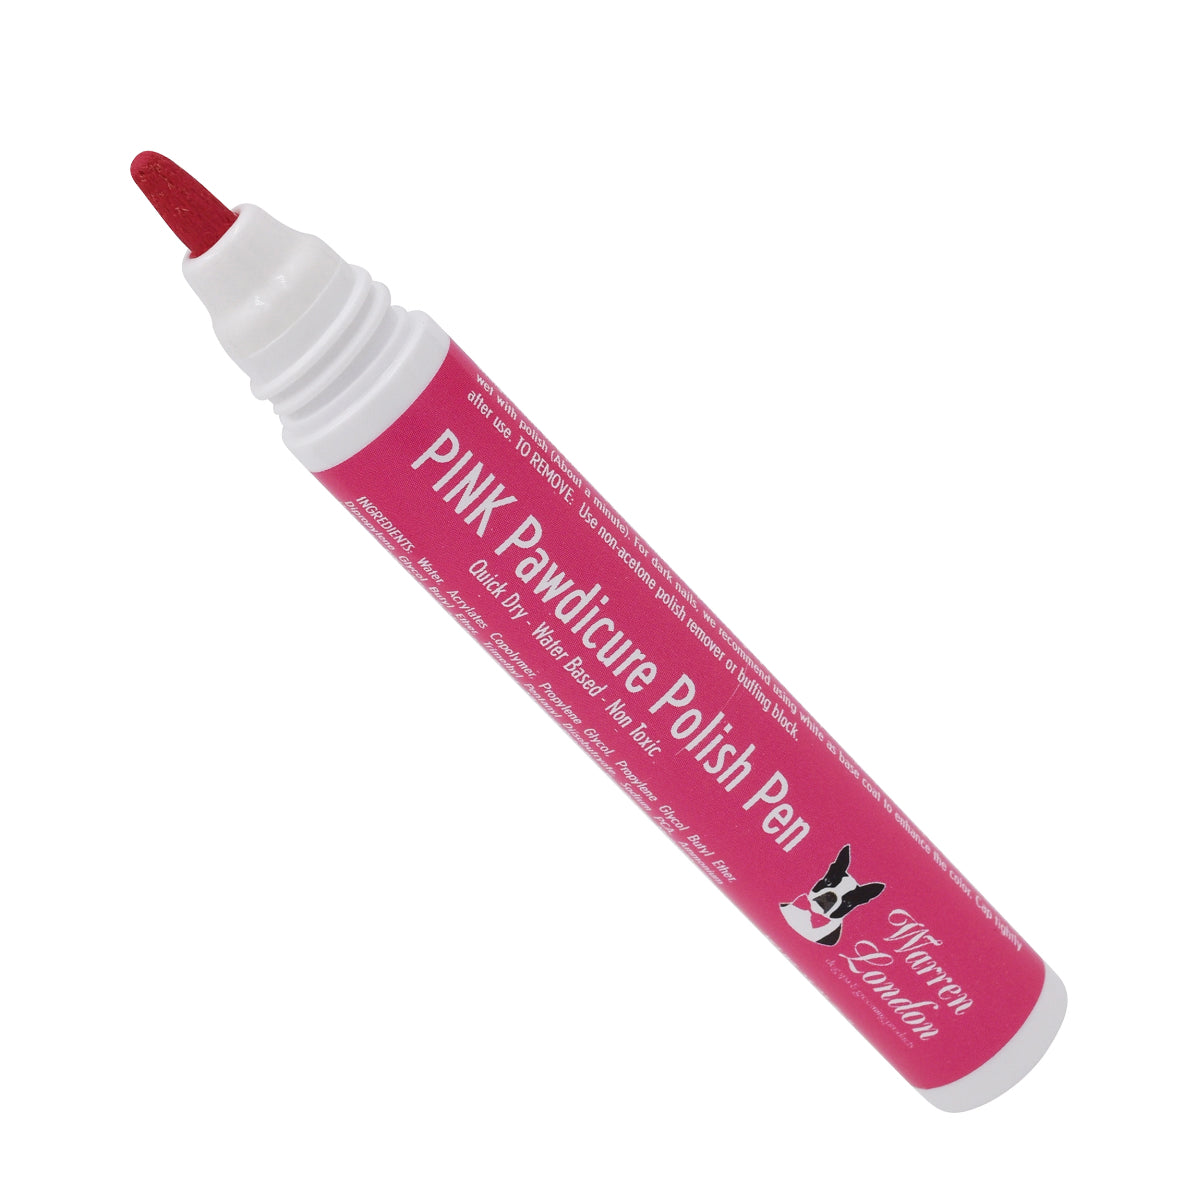 Pawdicure Polish Pens - Choose From 13 Colors! - Dog Nail Polish